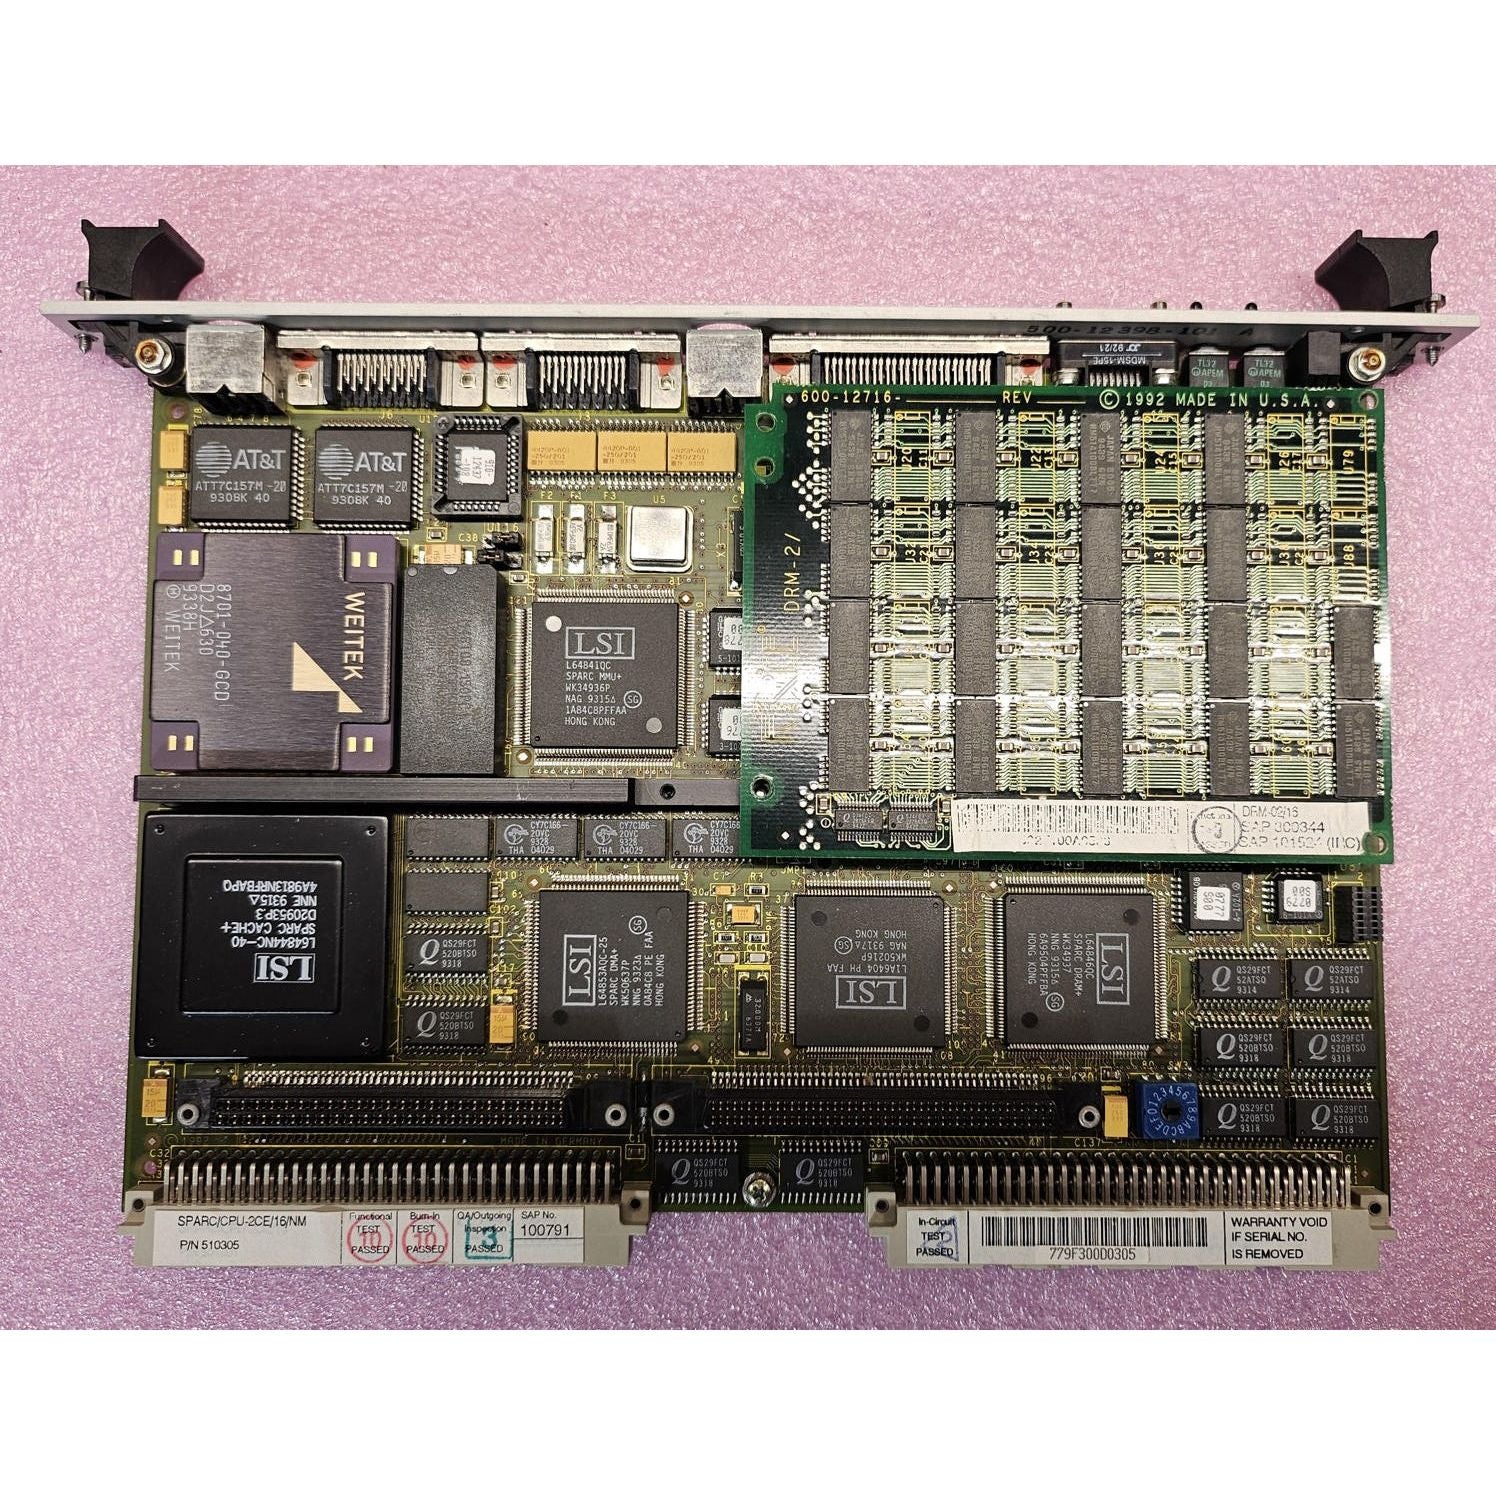 CPU-2CE/16 |力计算机